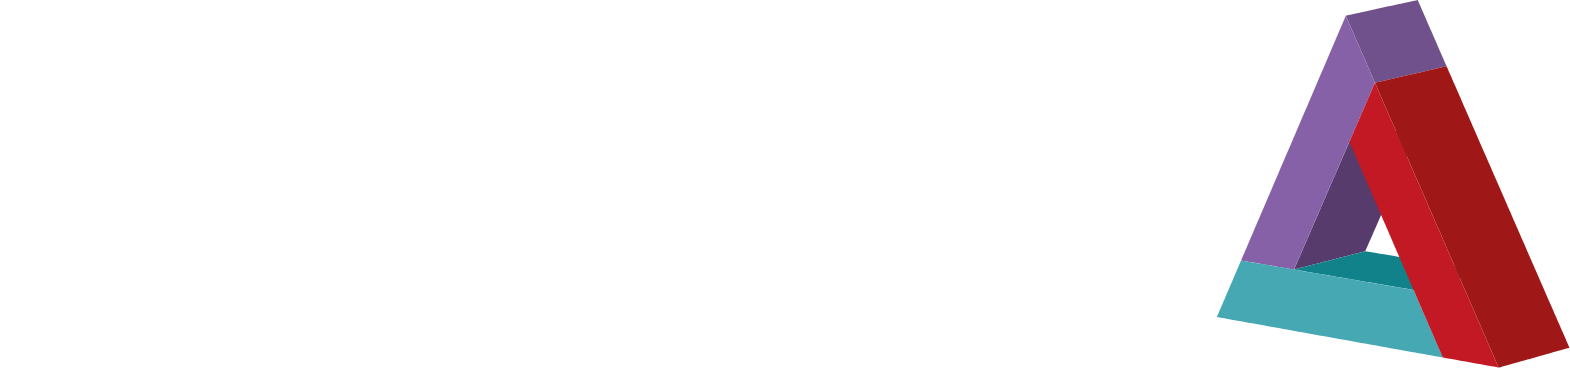 Helvetia Holding logo large for dark backgrounds (transparent PNG)